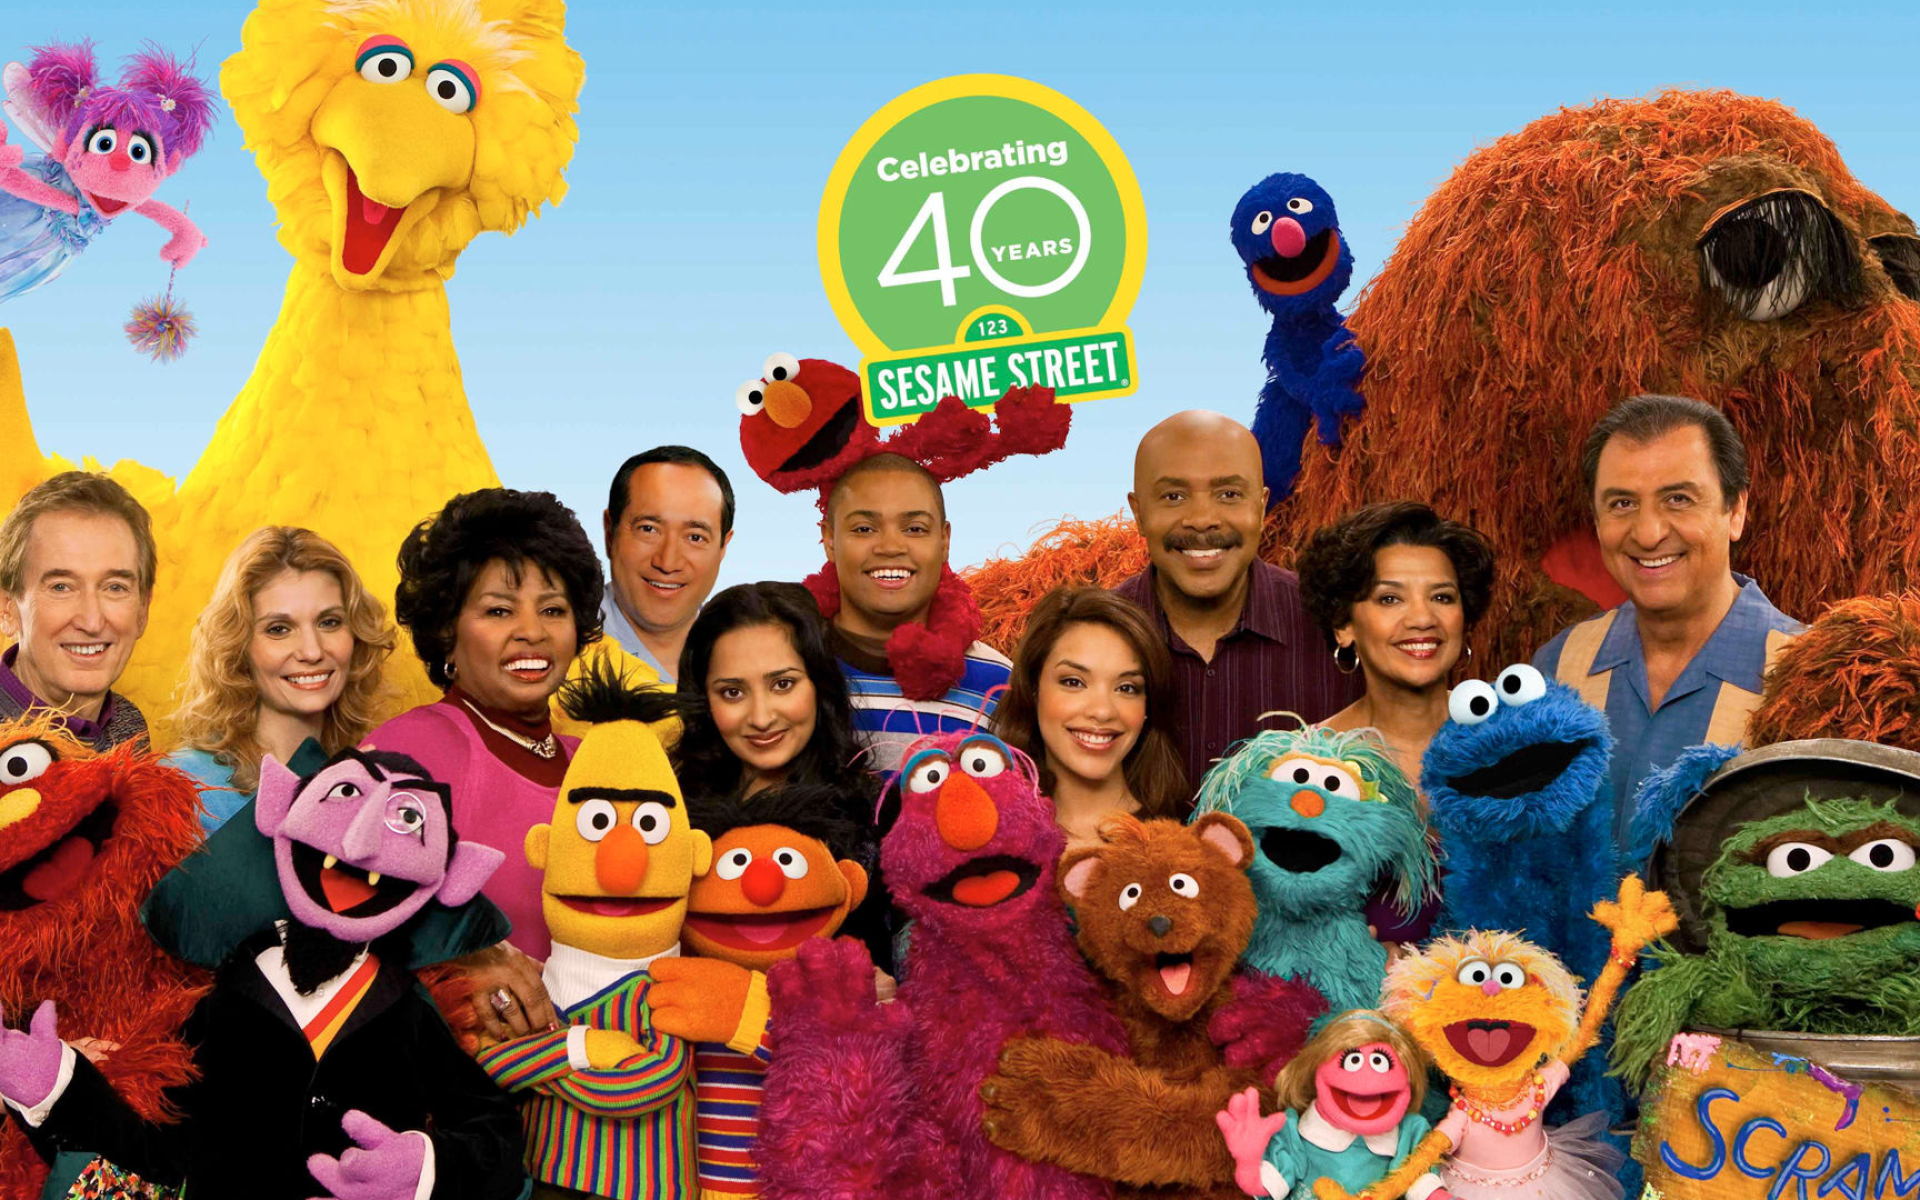 Sesame Street: Chris Knowings, Count von Count, Elmo, Ernie, Big Bird, Abby Cadabby, Educational TV series cast. 1920x1200 HD Wallpaper.